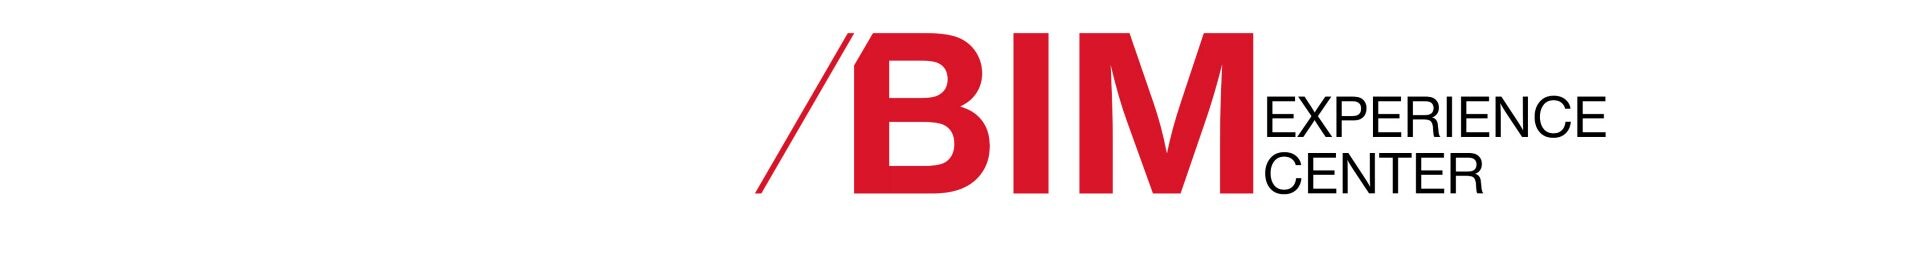 BIM Experience Center Logo